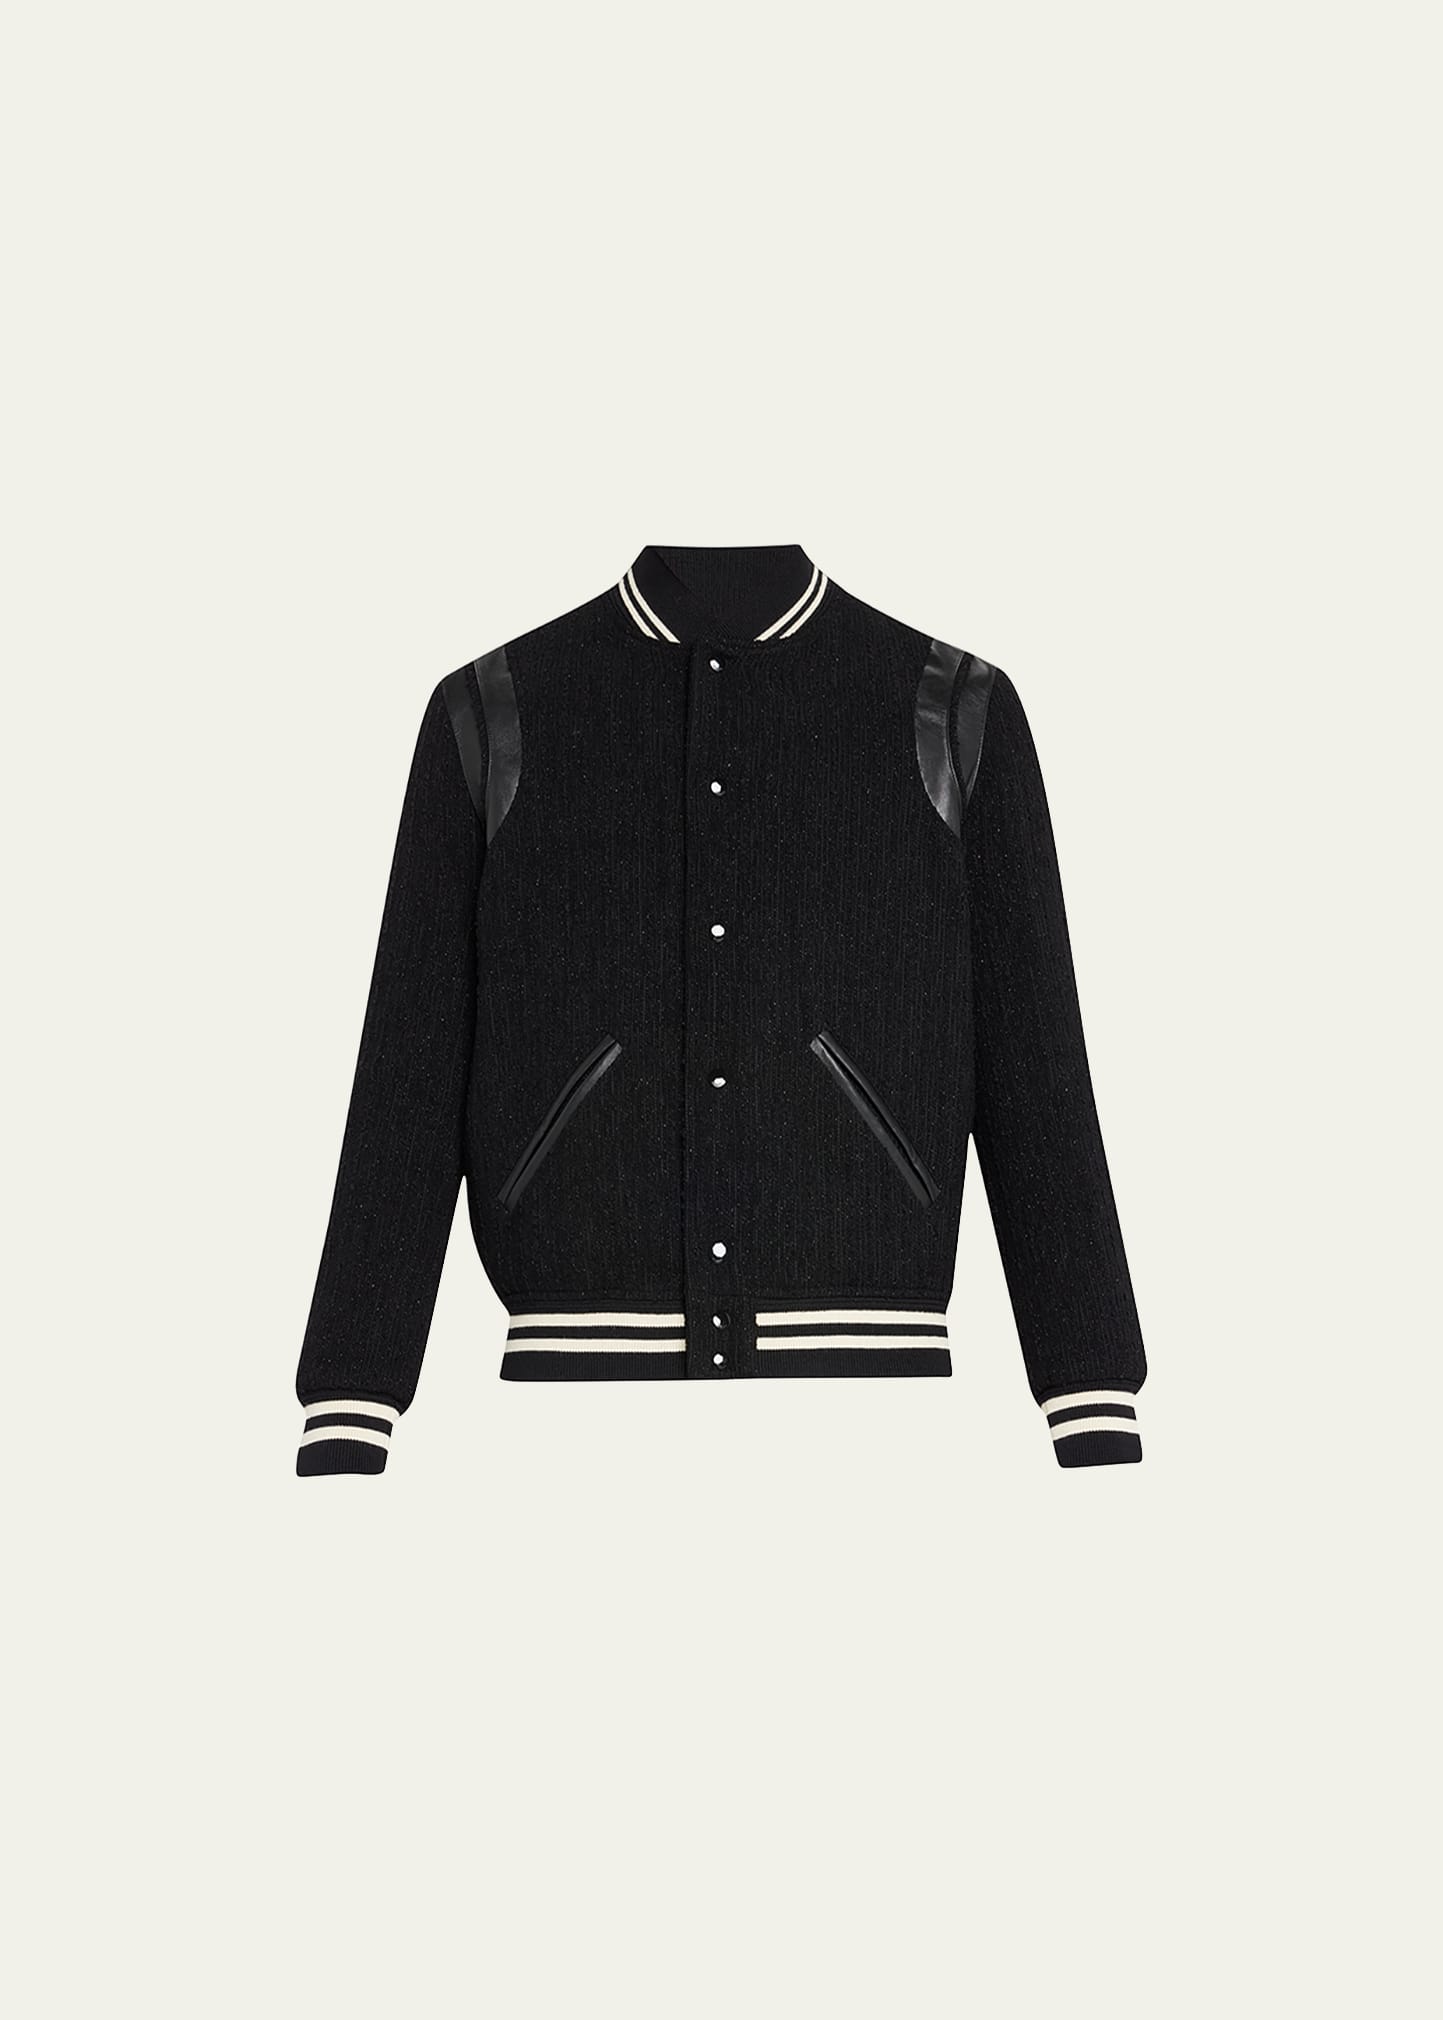 Saint Laurent Teddy Leather-trimmed Metallic Virgin Wool-blend Bomber Jacket In Noir / Noir